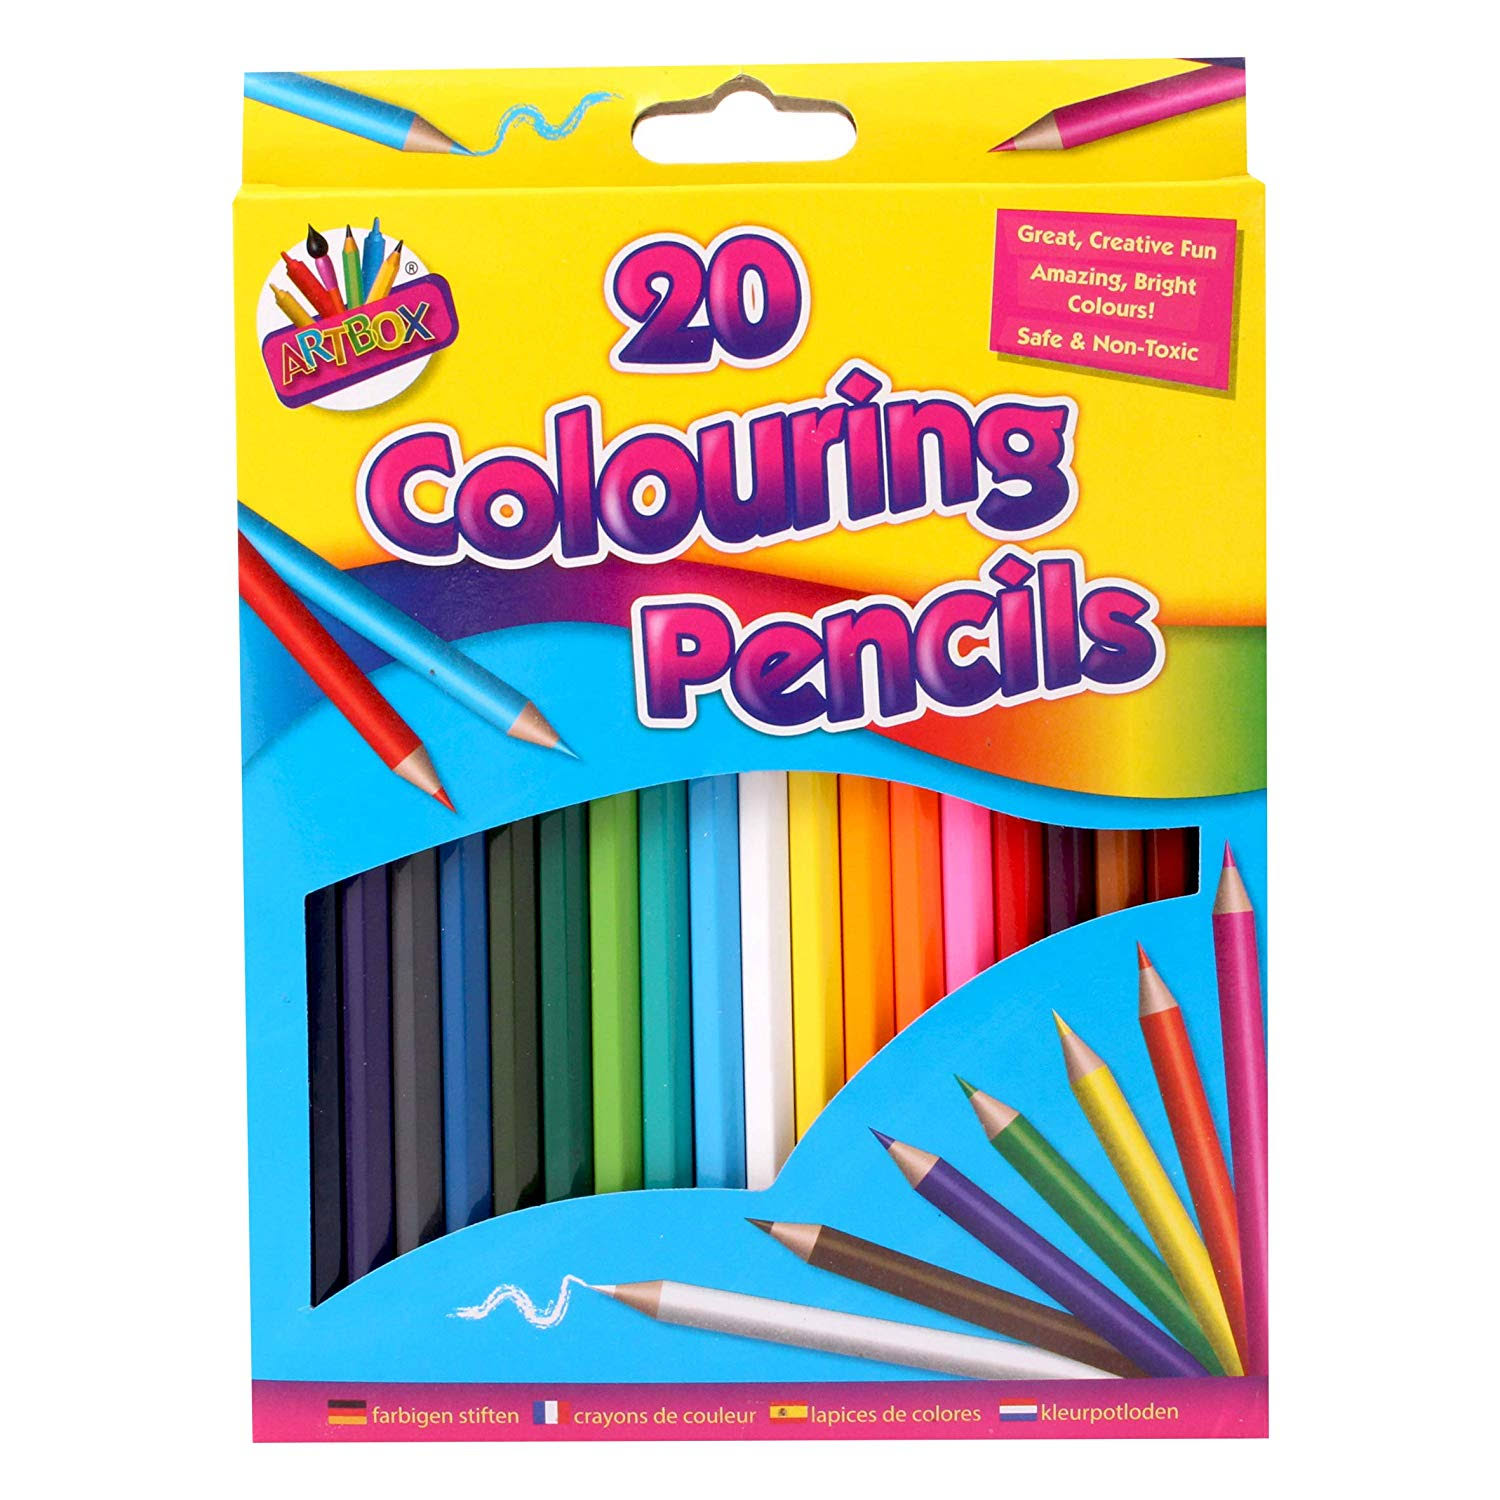 Artbox Full Size Colouring Pencils - x 20